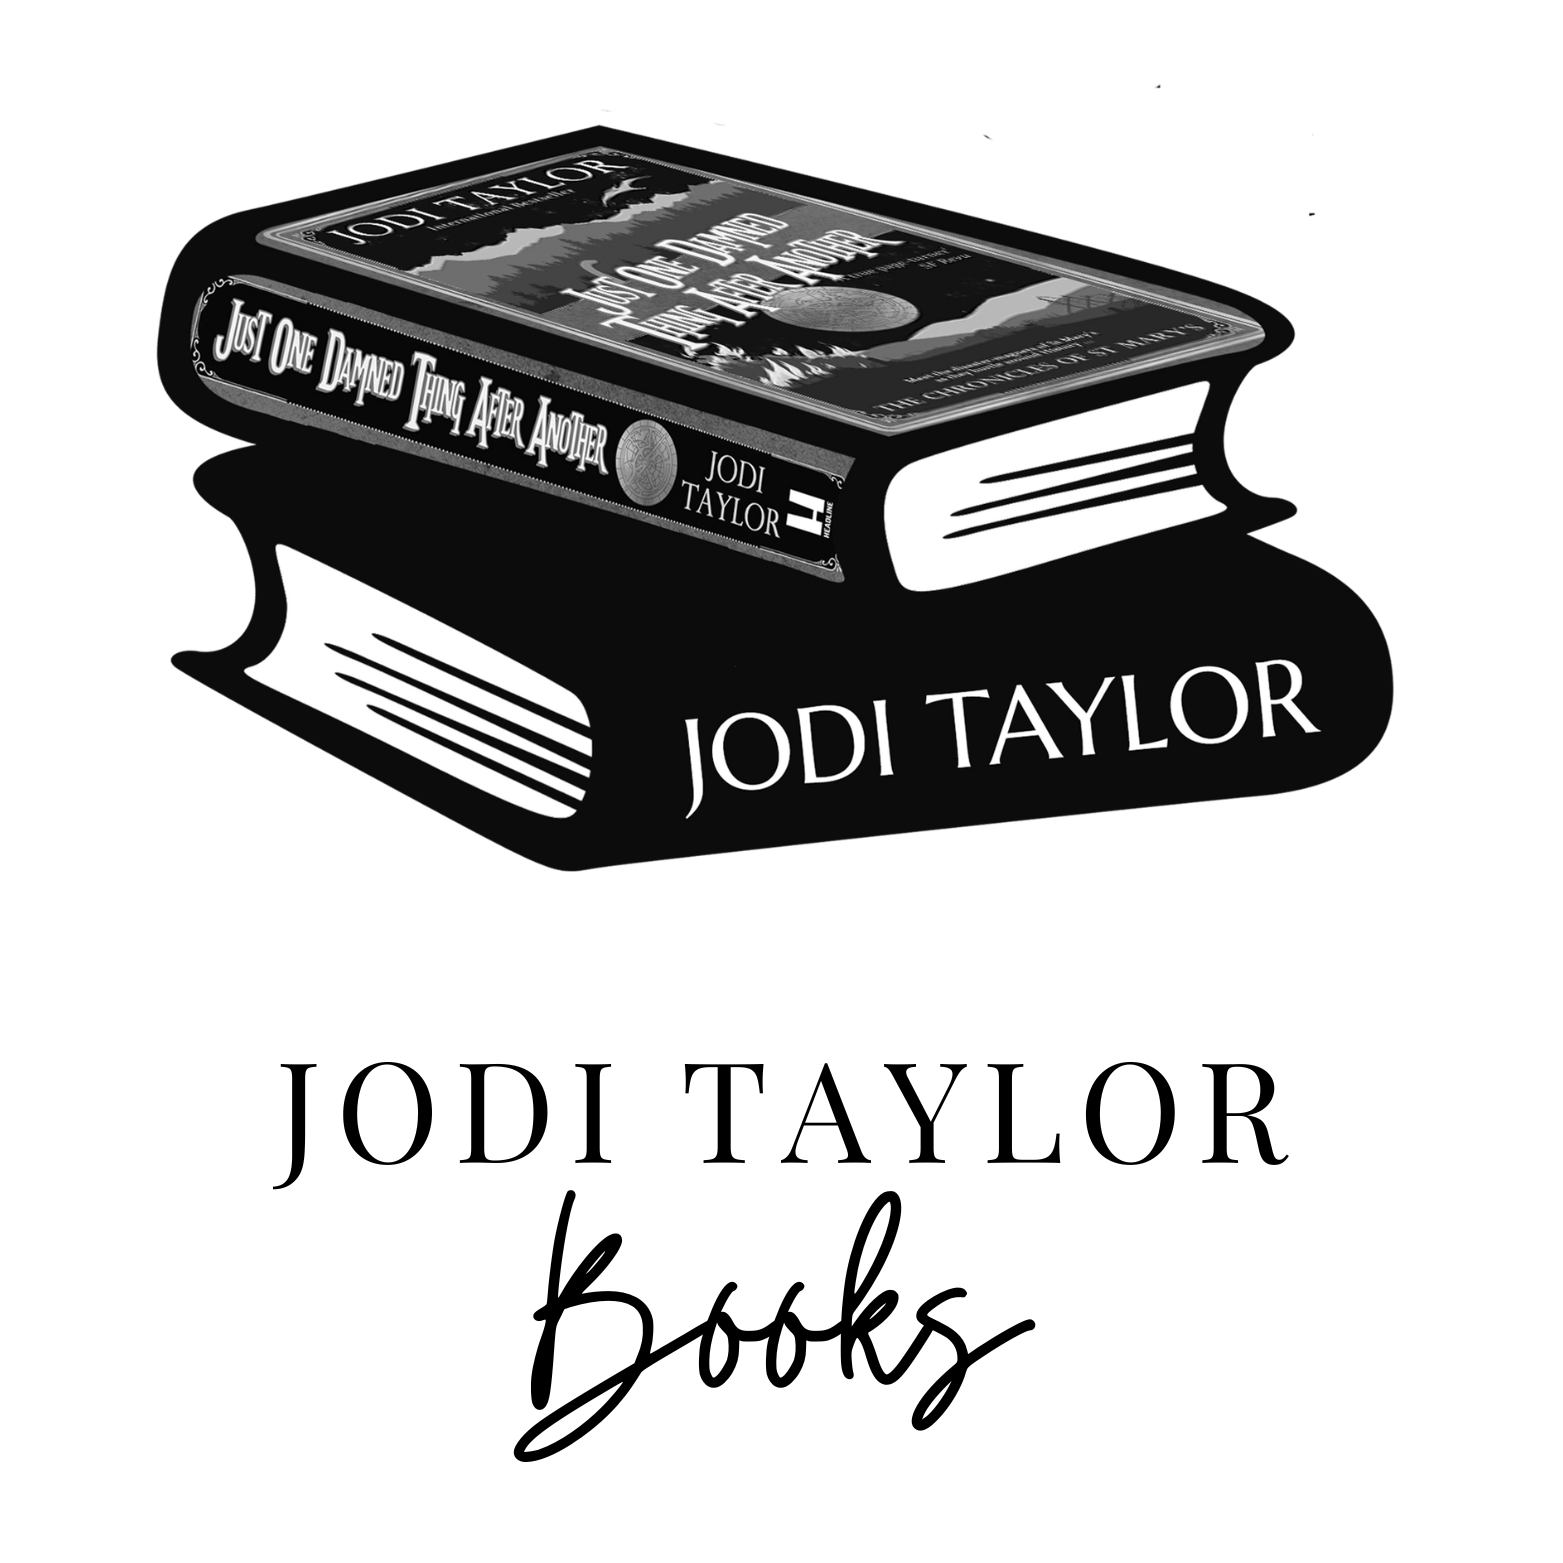 Artwork for Jodi Taylor Books